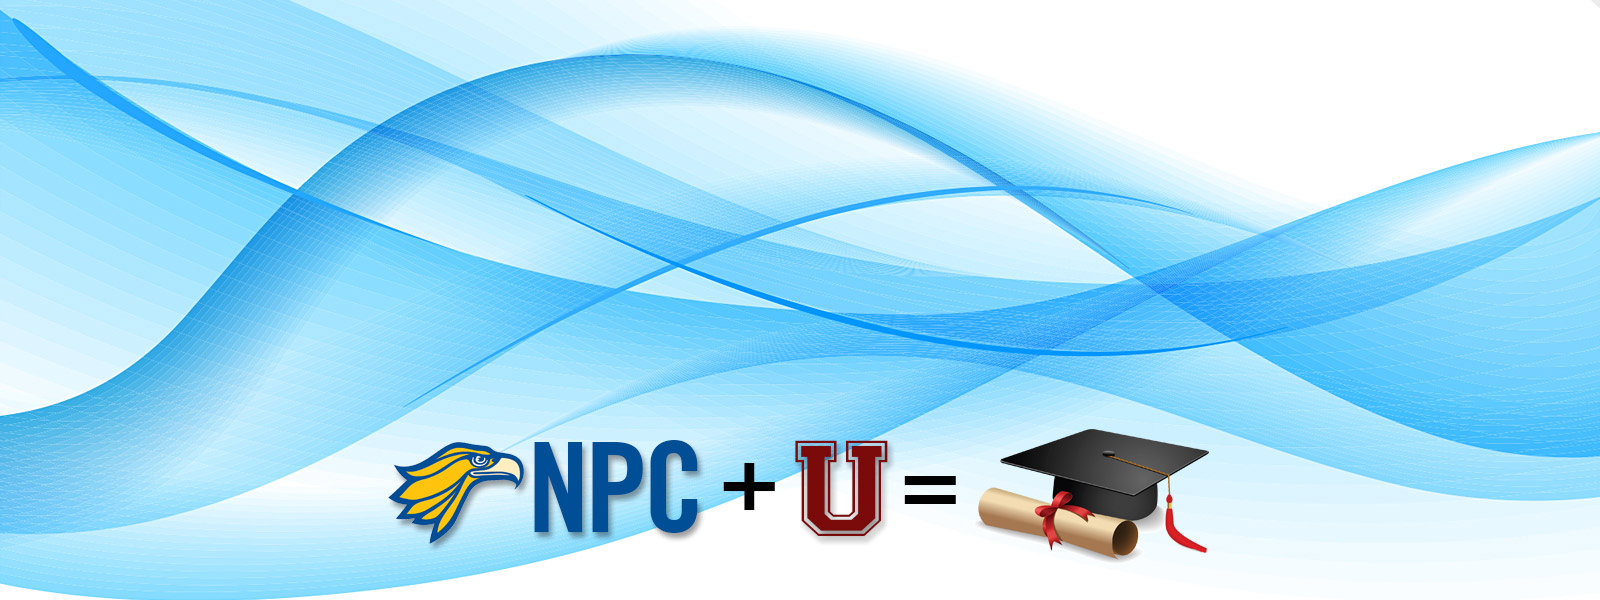 NPC plus you equals a degree